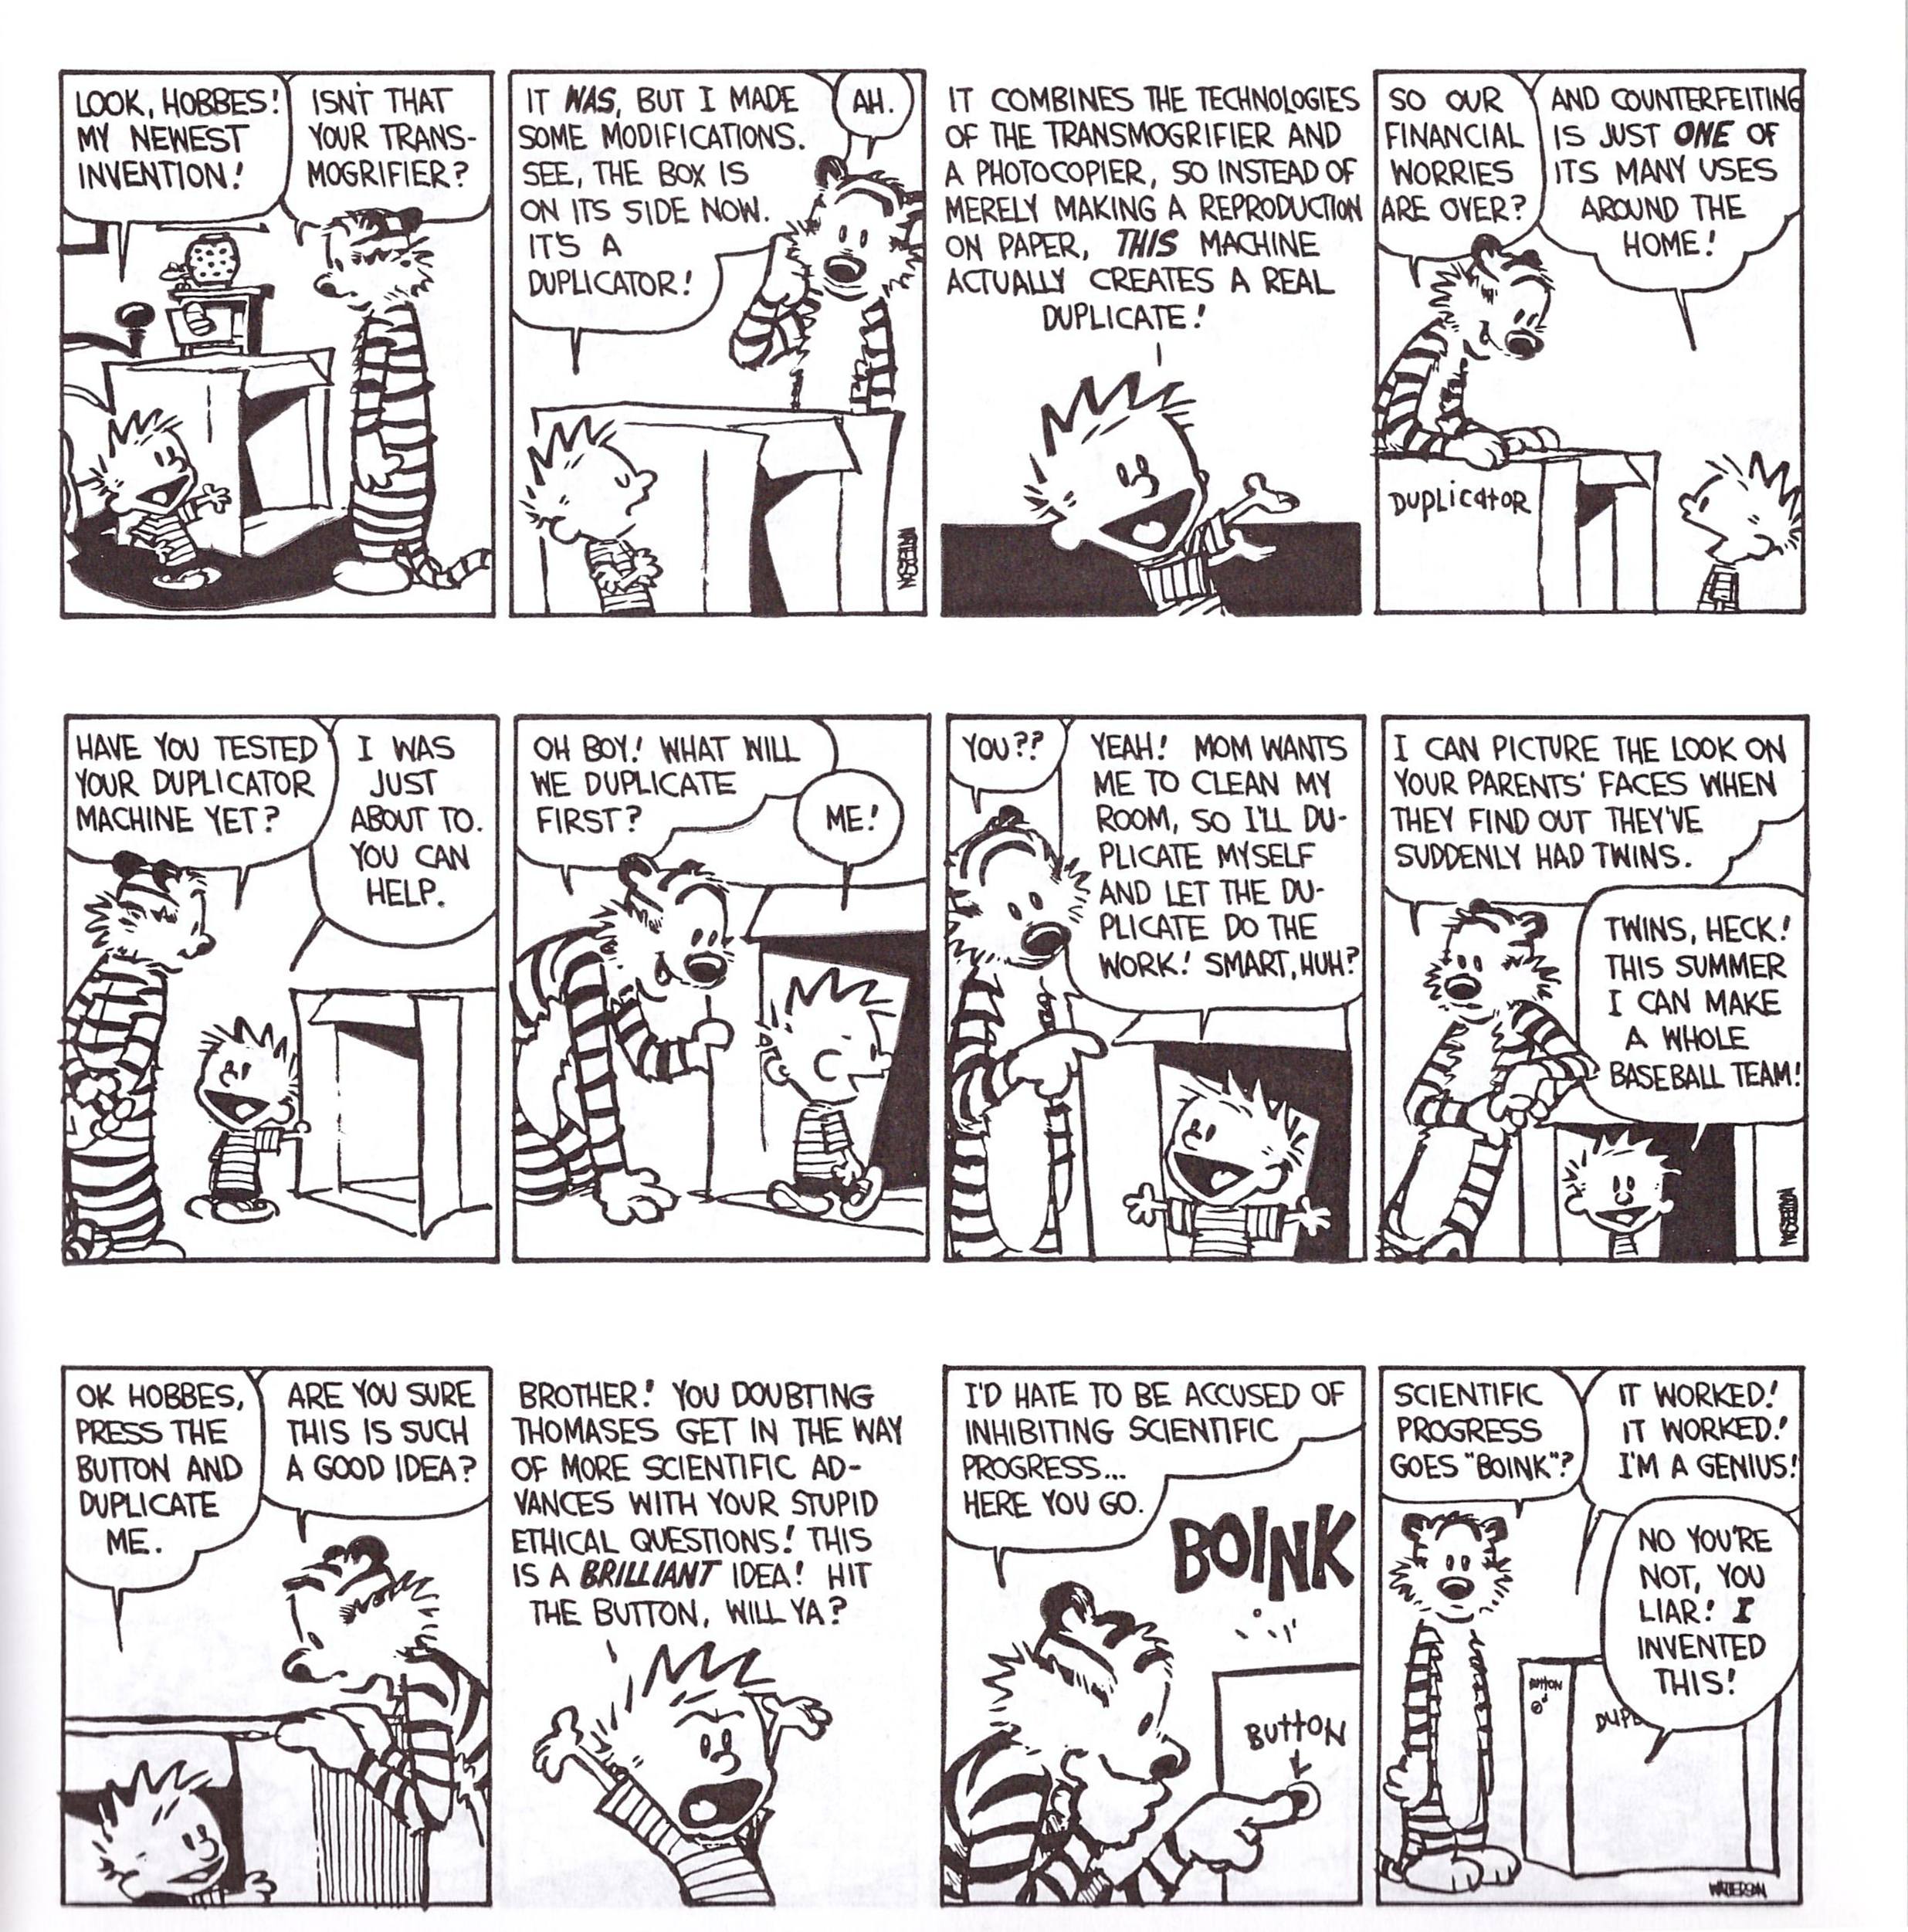 Calvin & Hobbes Scientific Progress Goes Boink review